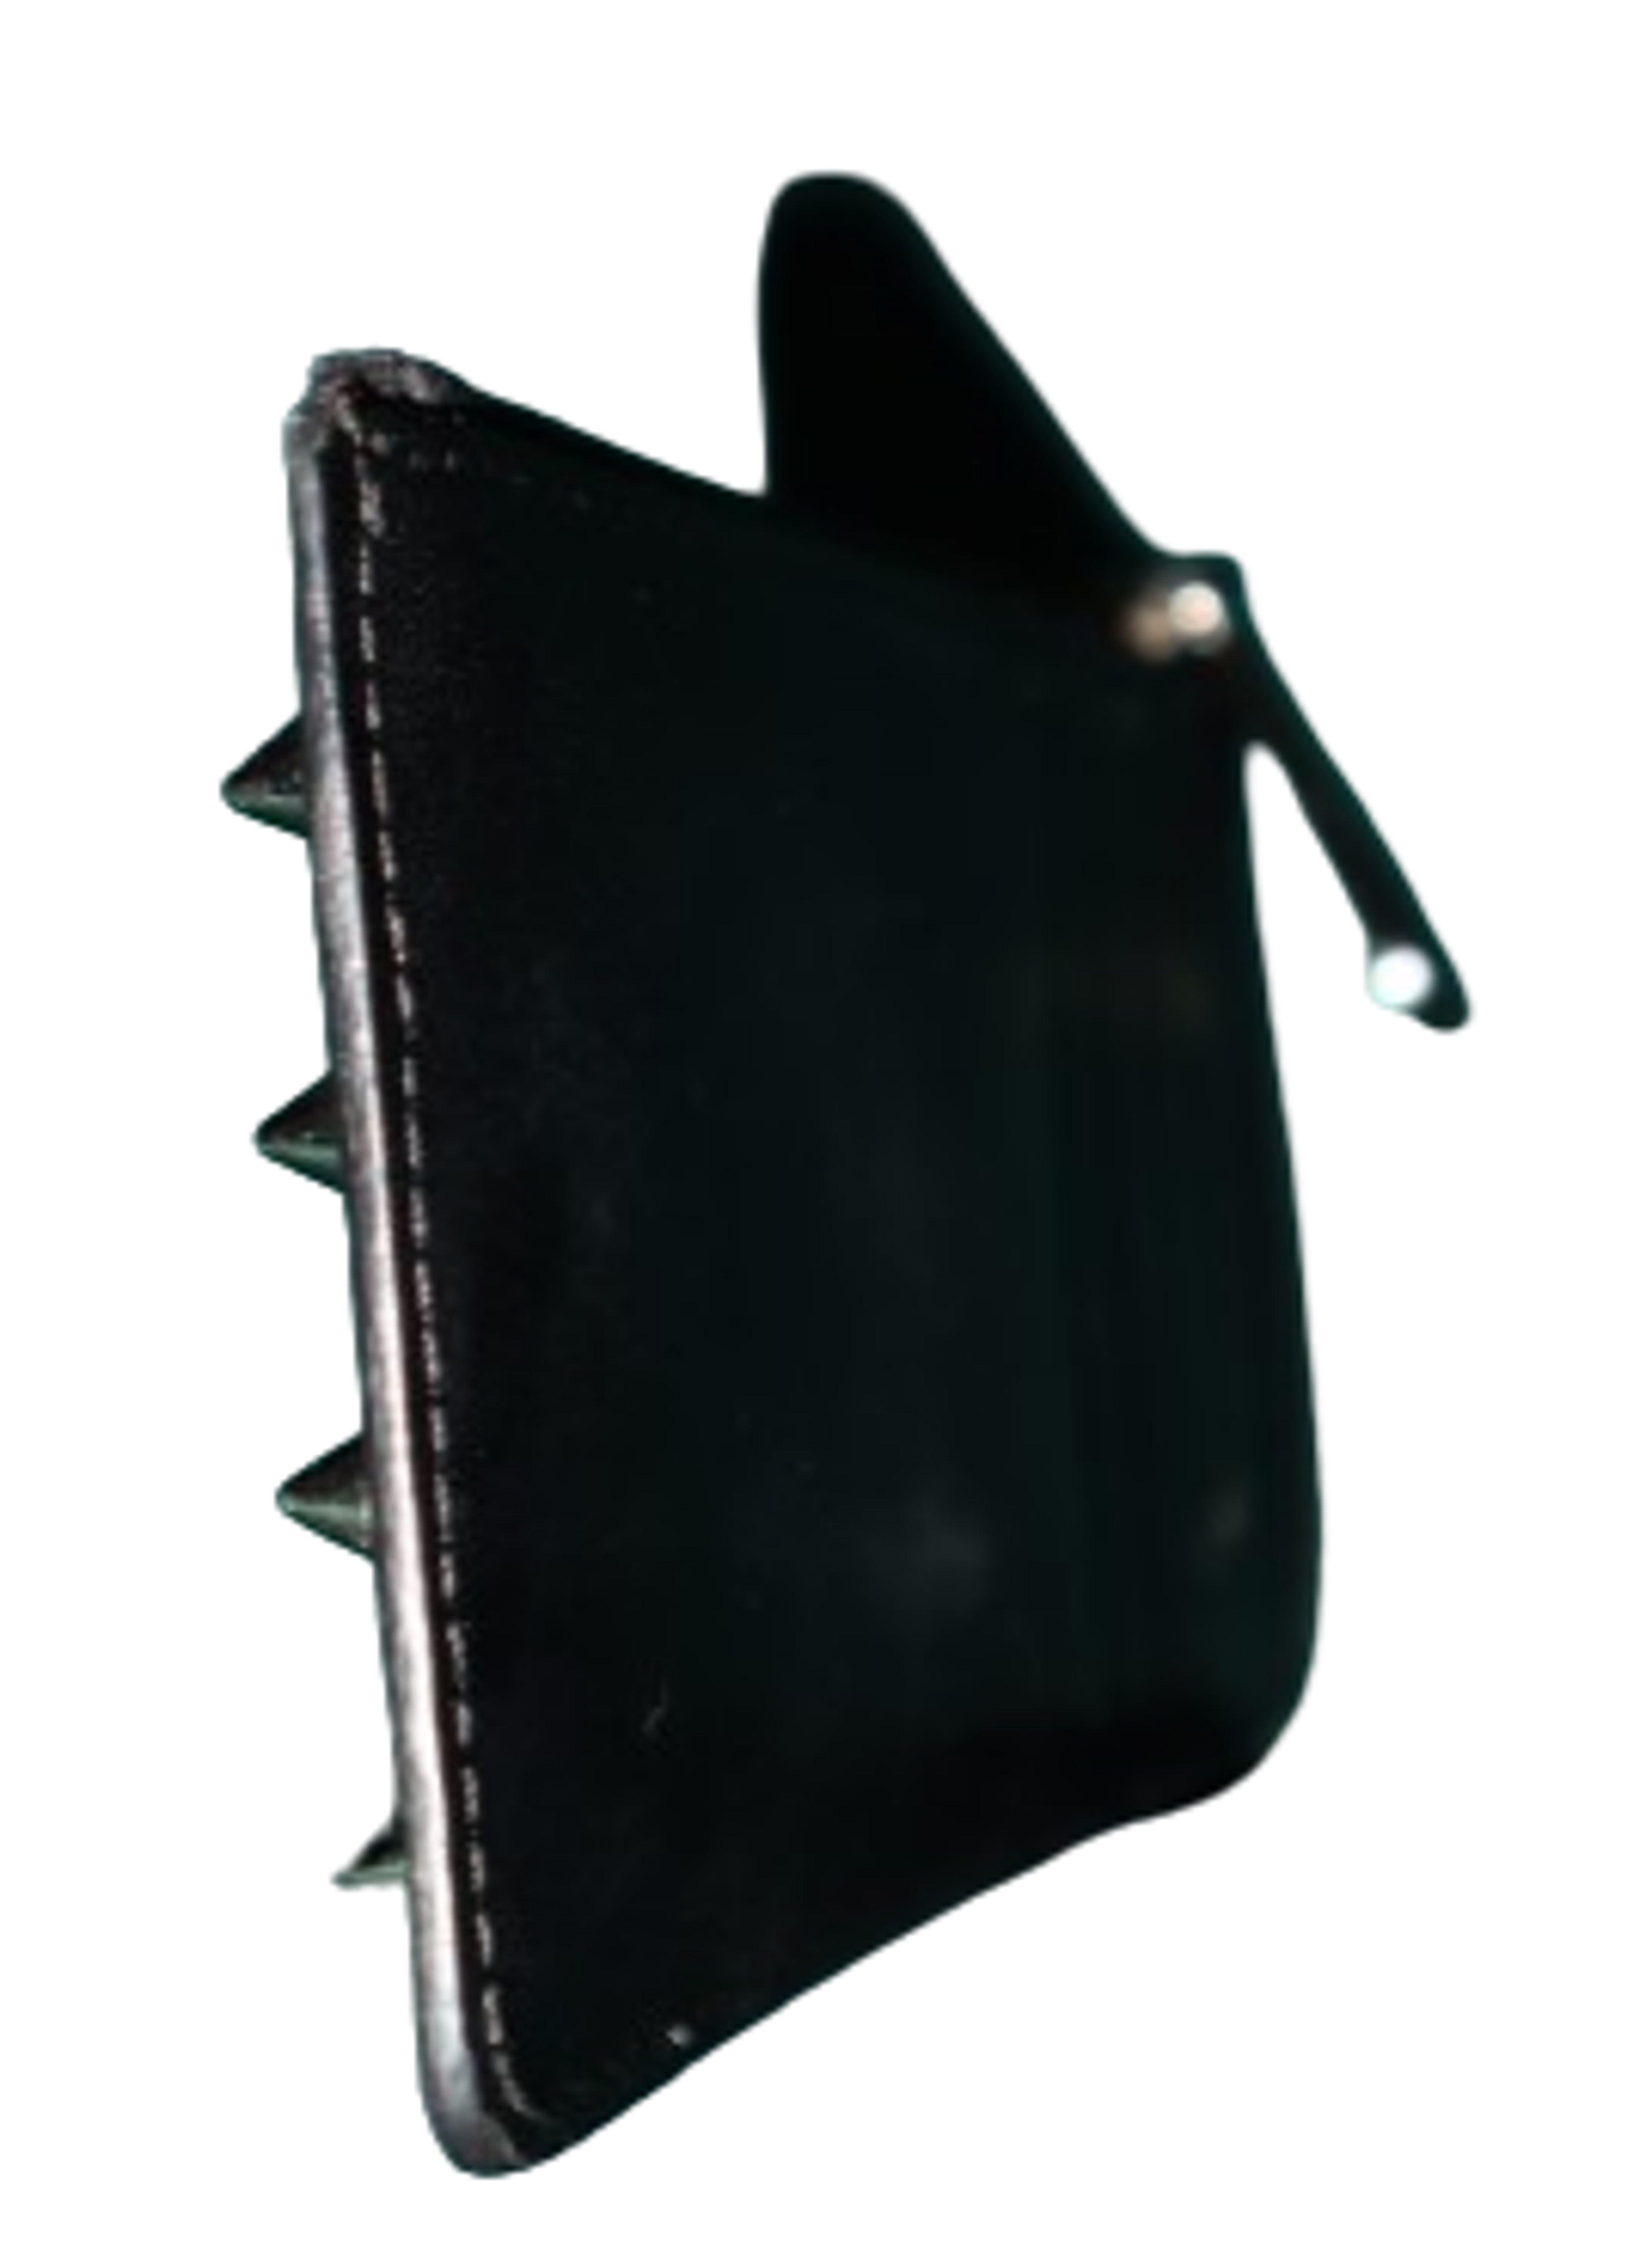 Alternate View 4 of FENDI Leather Card Holder